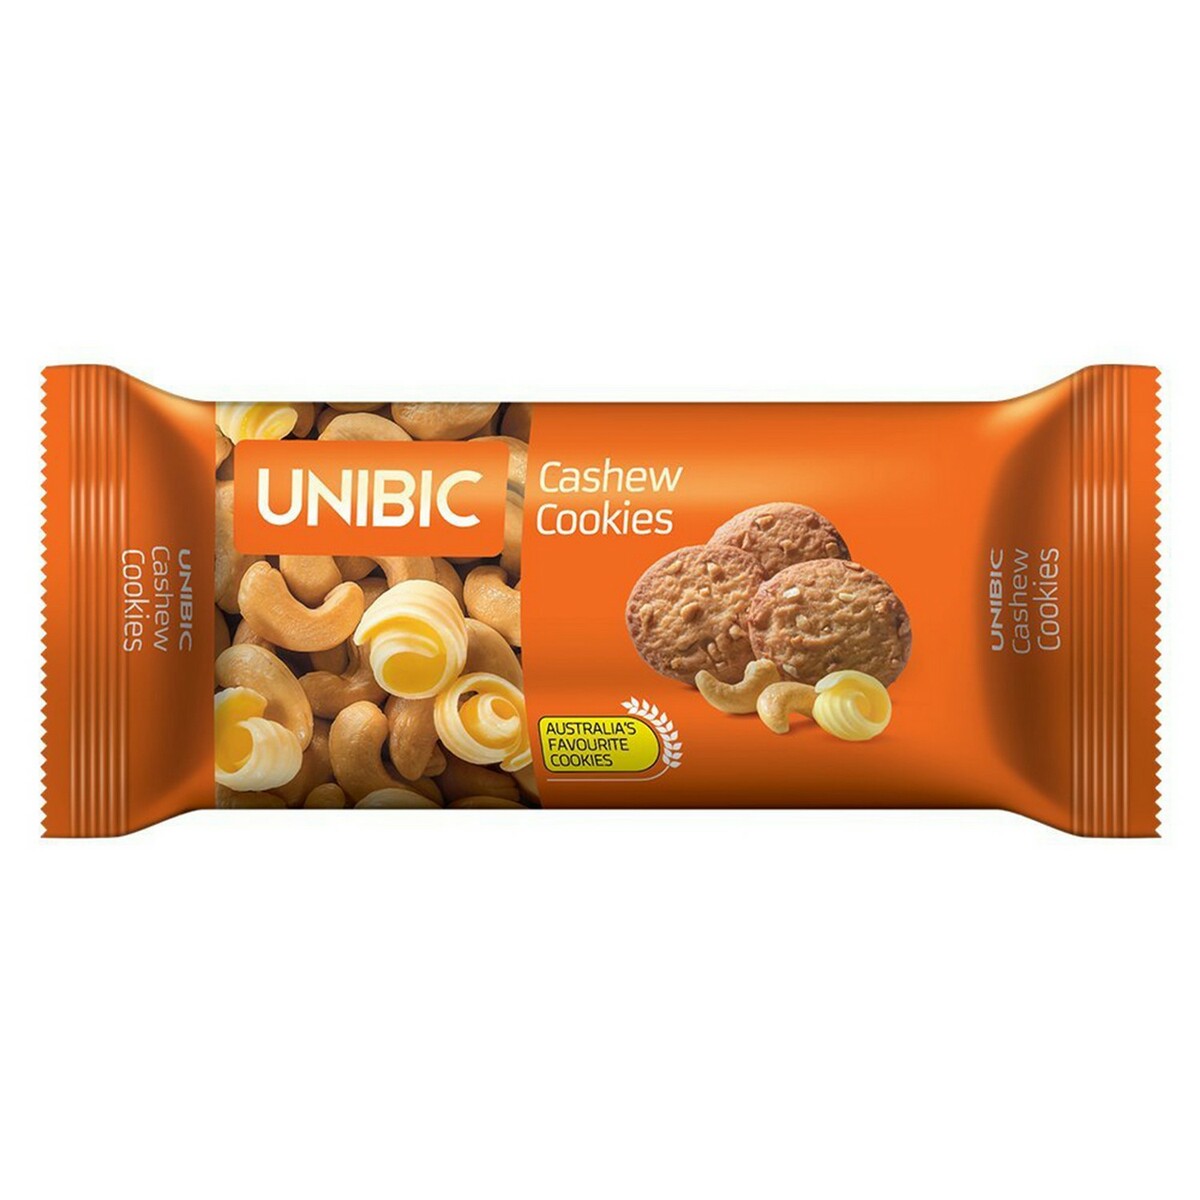 Unibic Cashew Cookies 75g